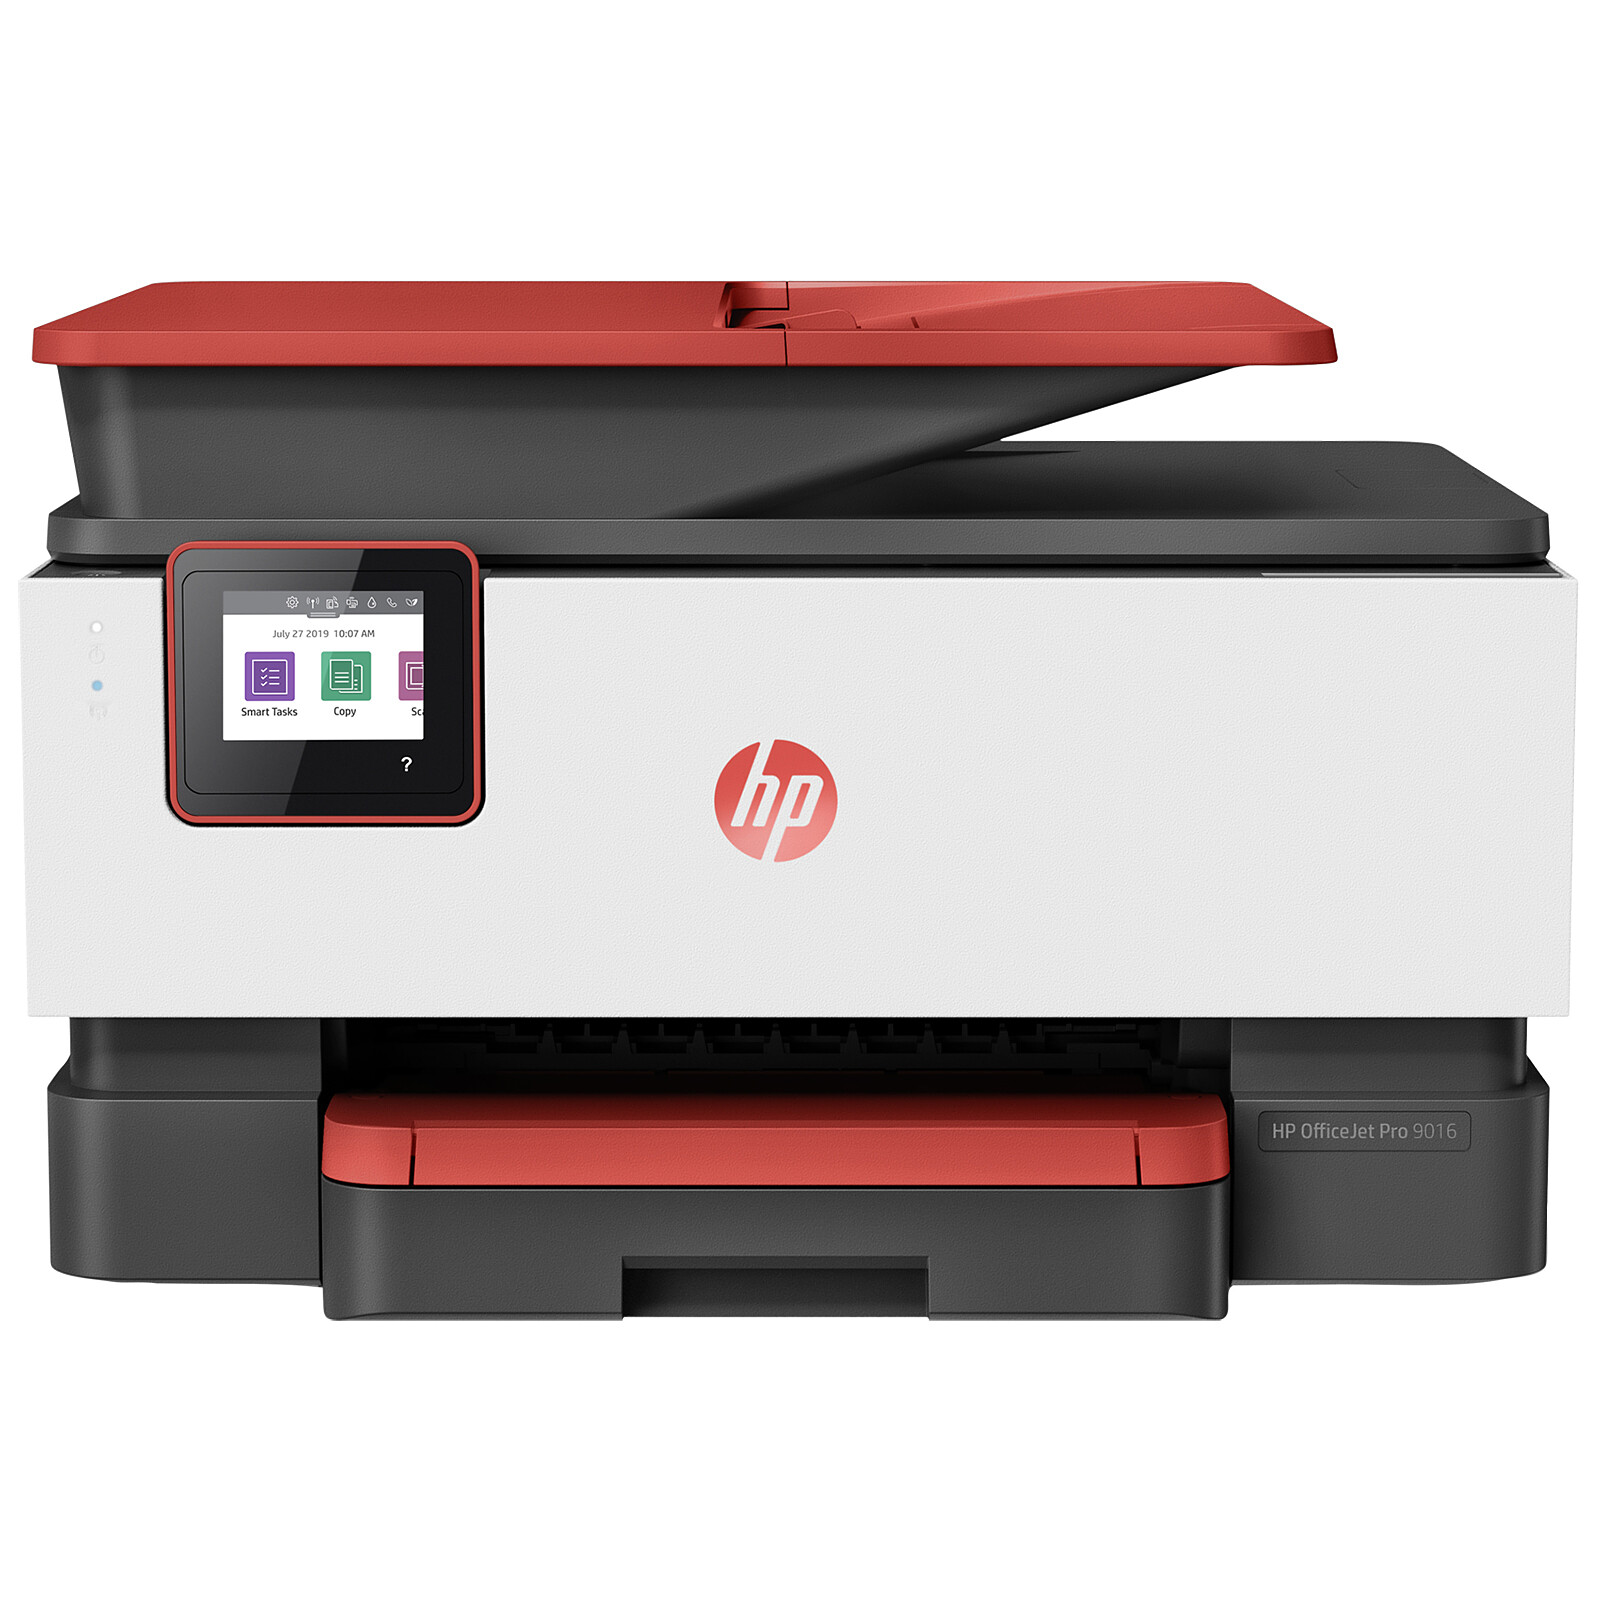 HP OfficeJet Pro 9016 - All-in-one printer - LDLC 3-year warranty